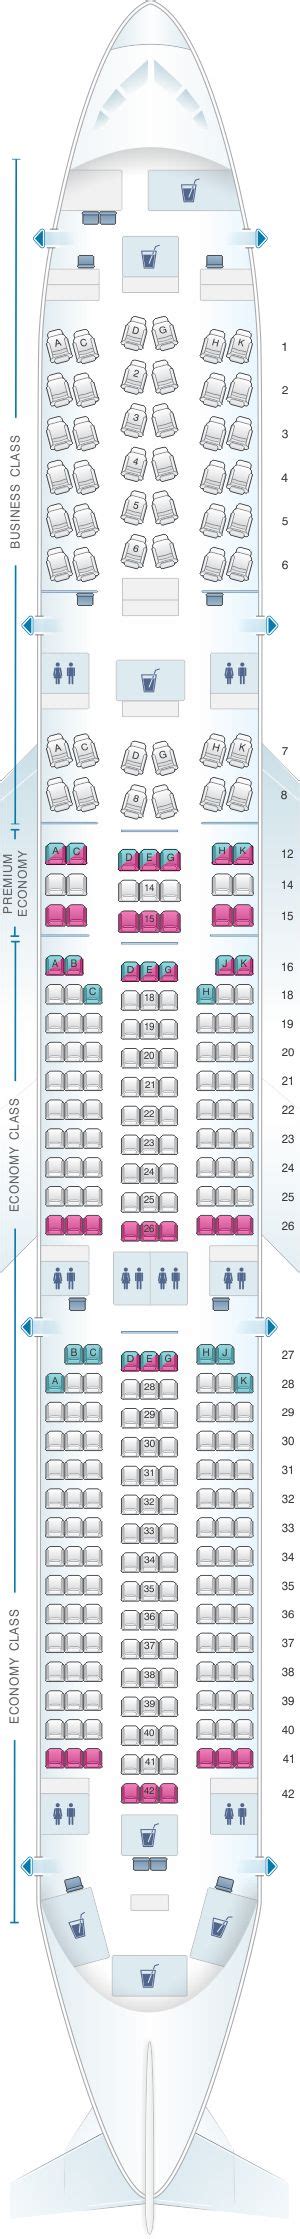 British Airways Airbus A350 Seat Map